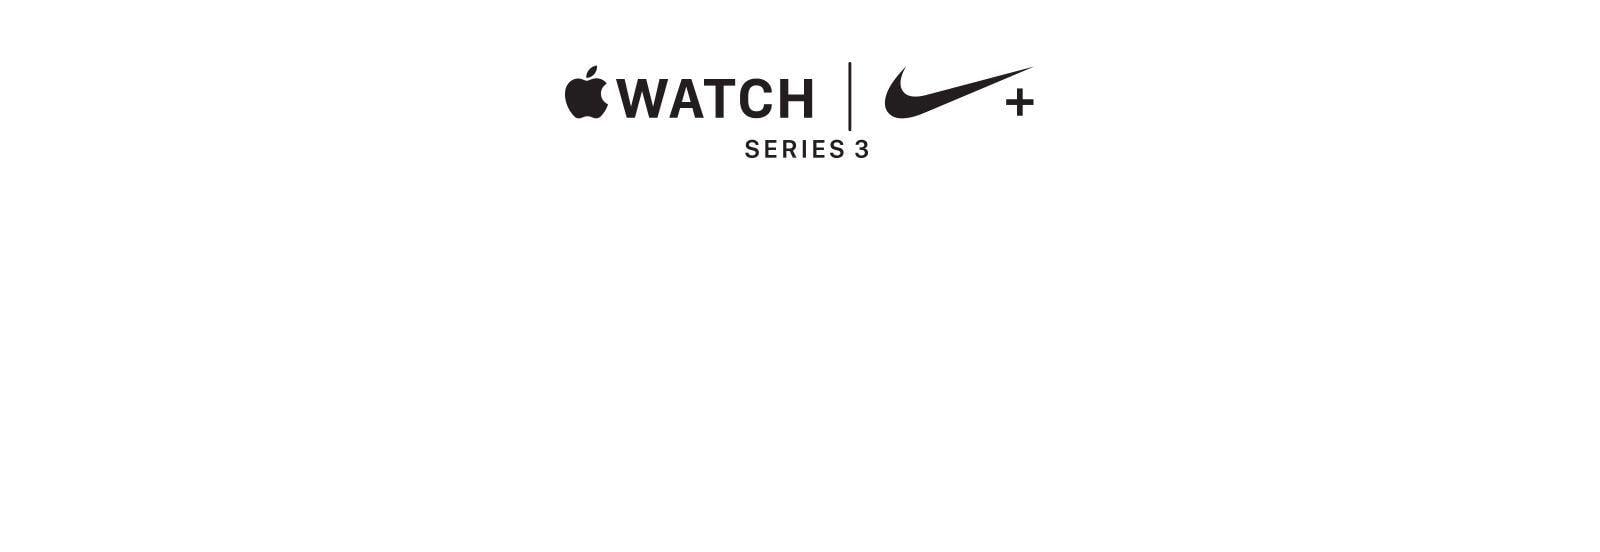 Nike Plus Logo - Nike+ Apple Watch Cellular Providers. Nike.com (AU)